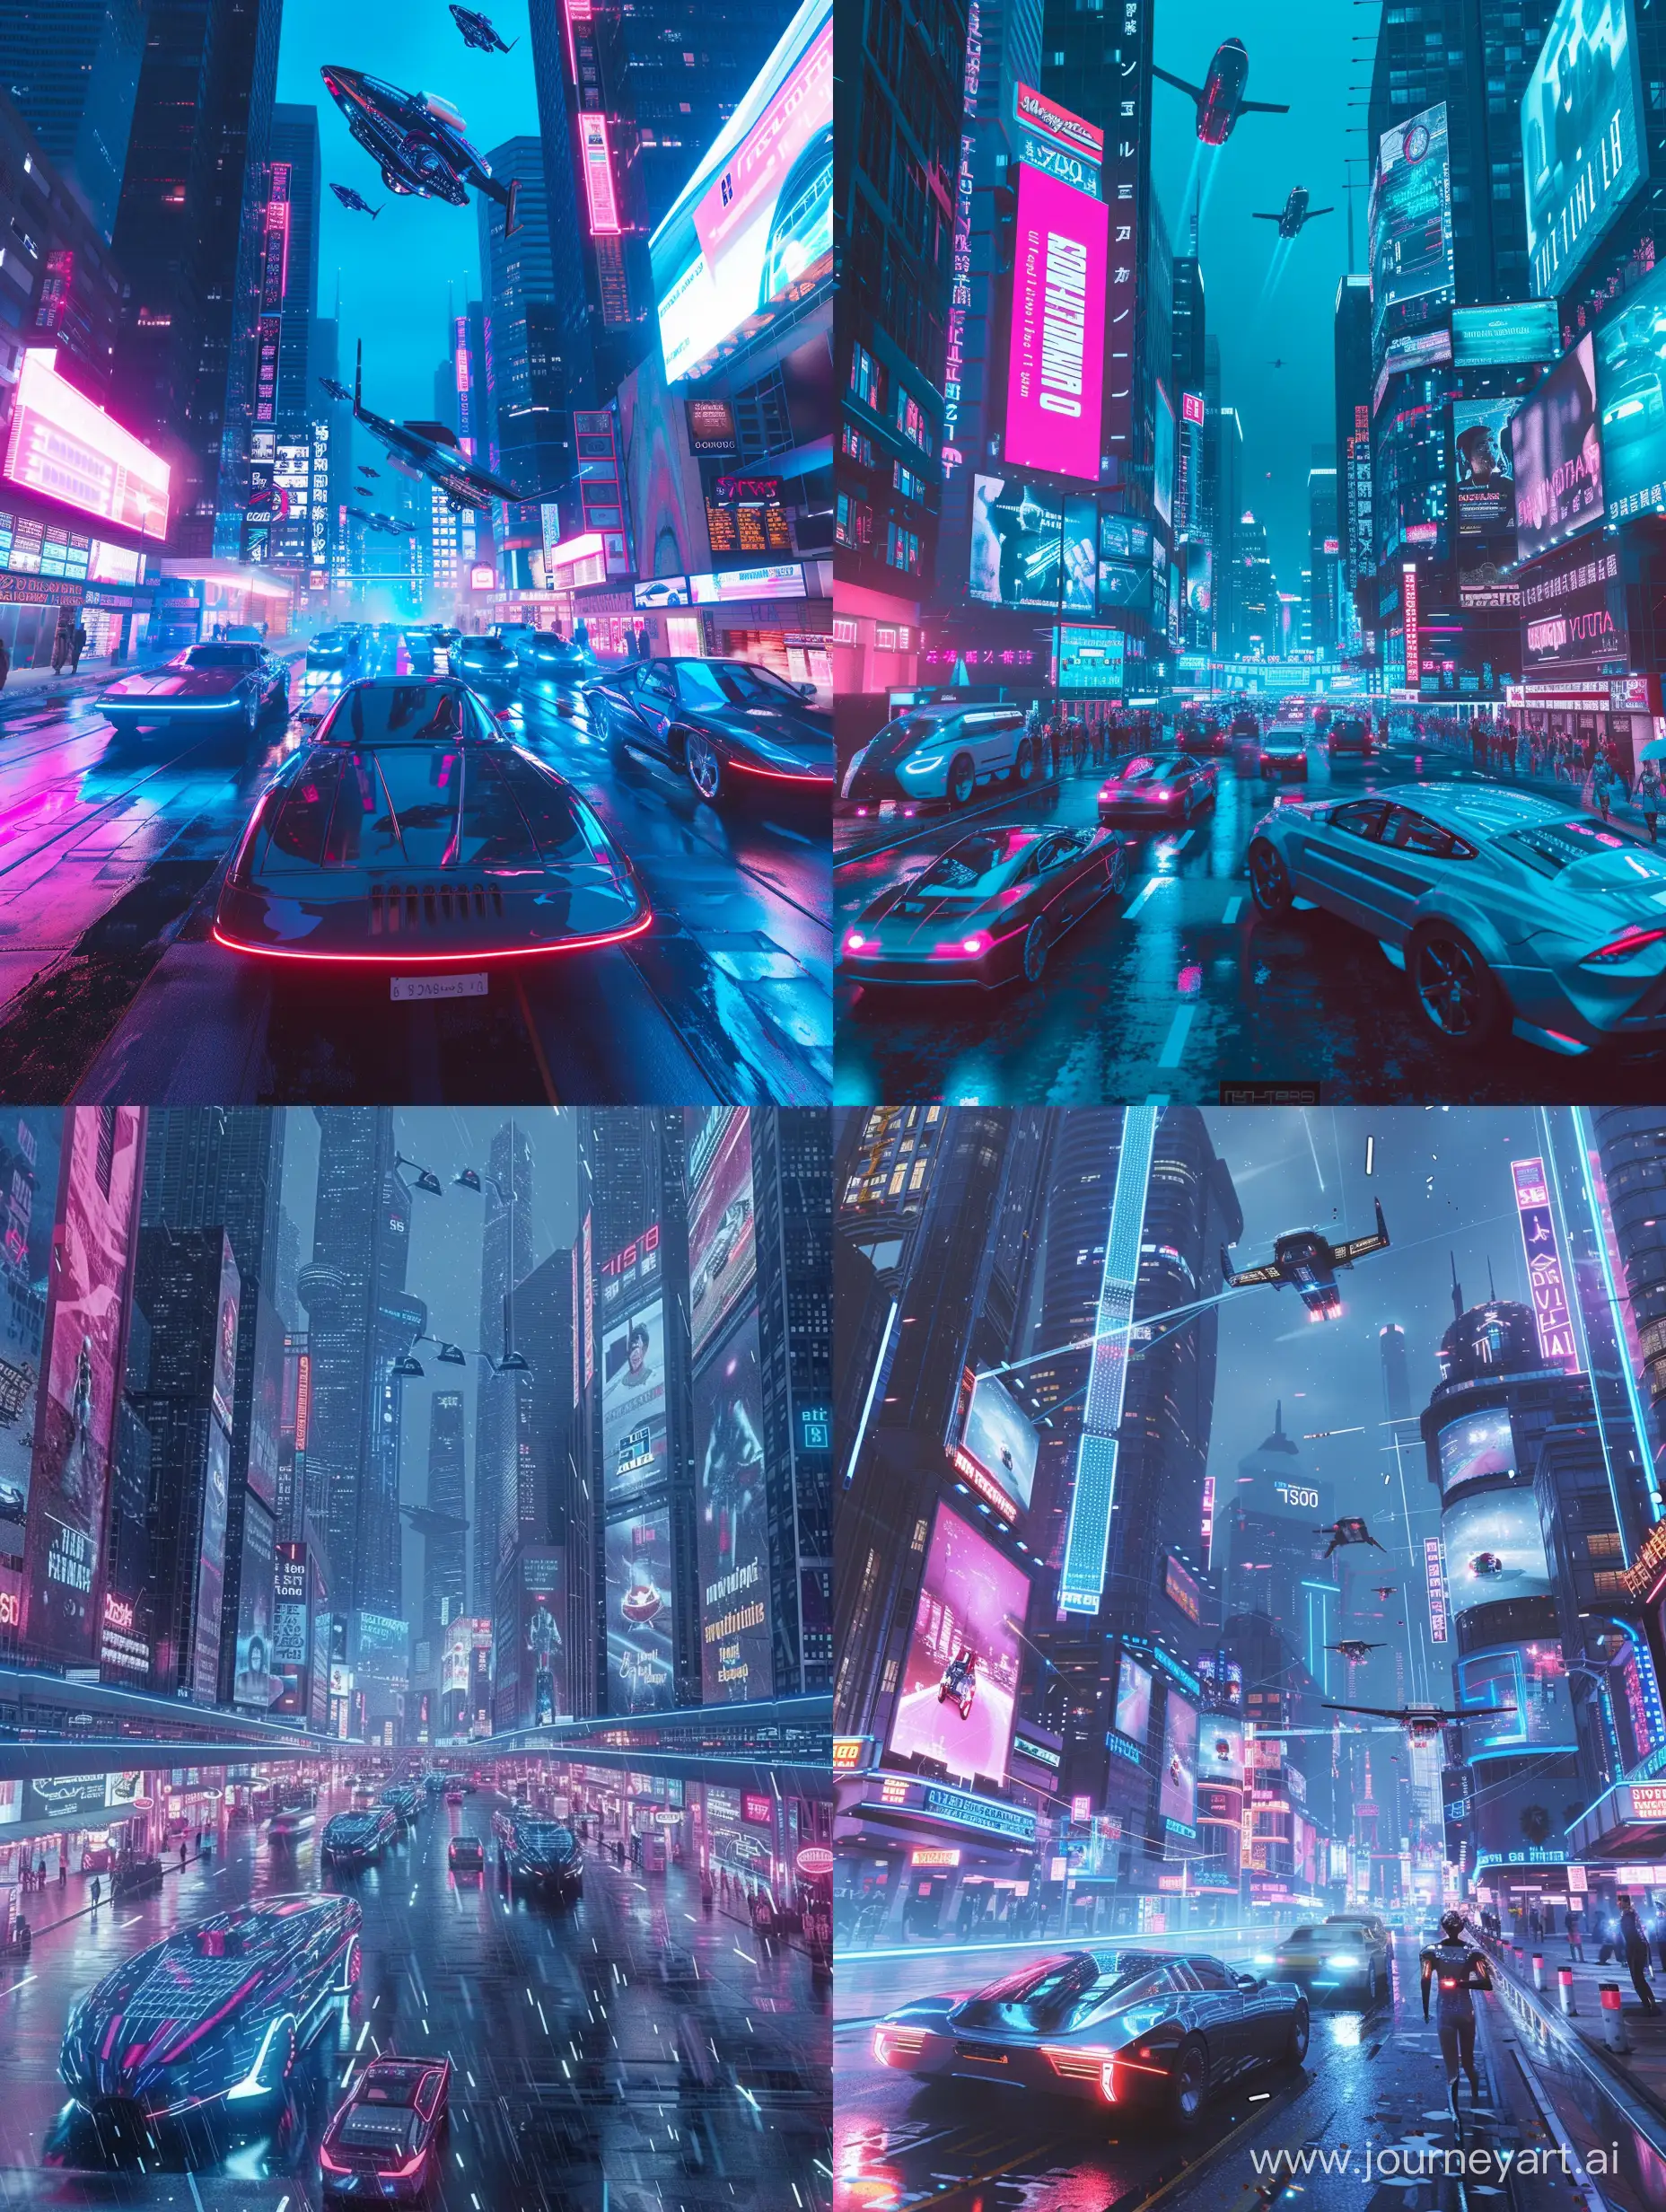 Futuristic-Neon-Cityscape-with-Cyberpunk-Vehicles-and-Fashion